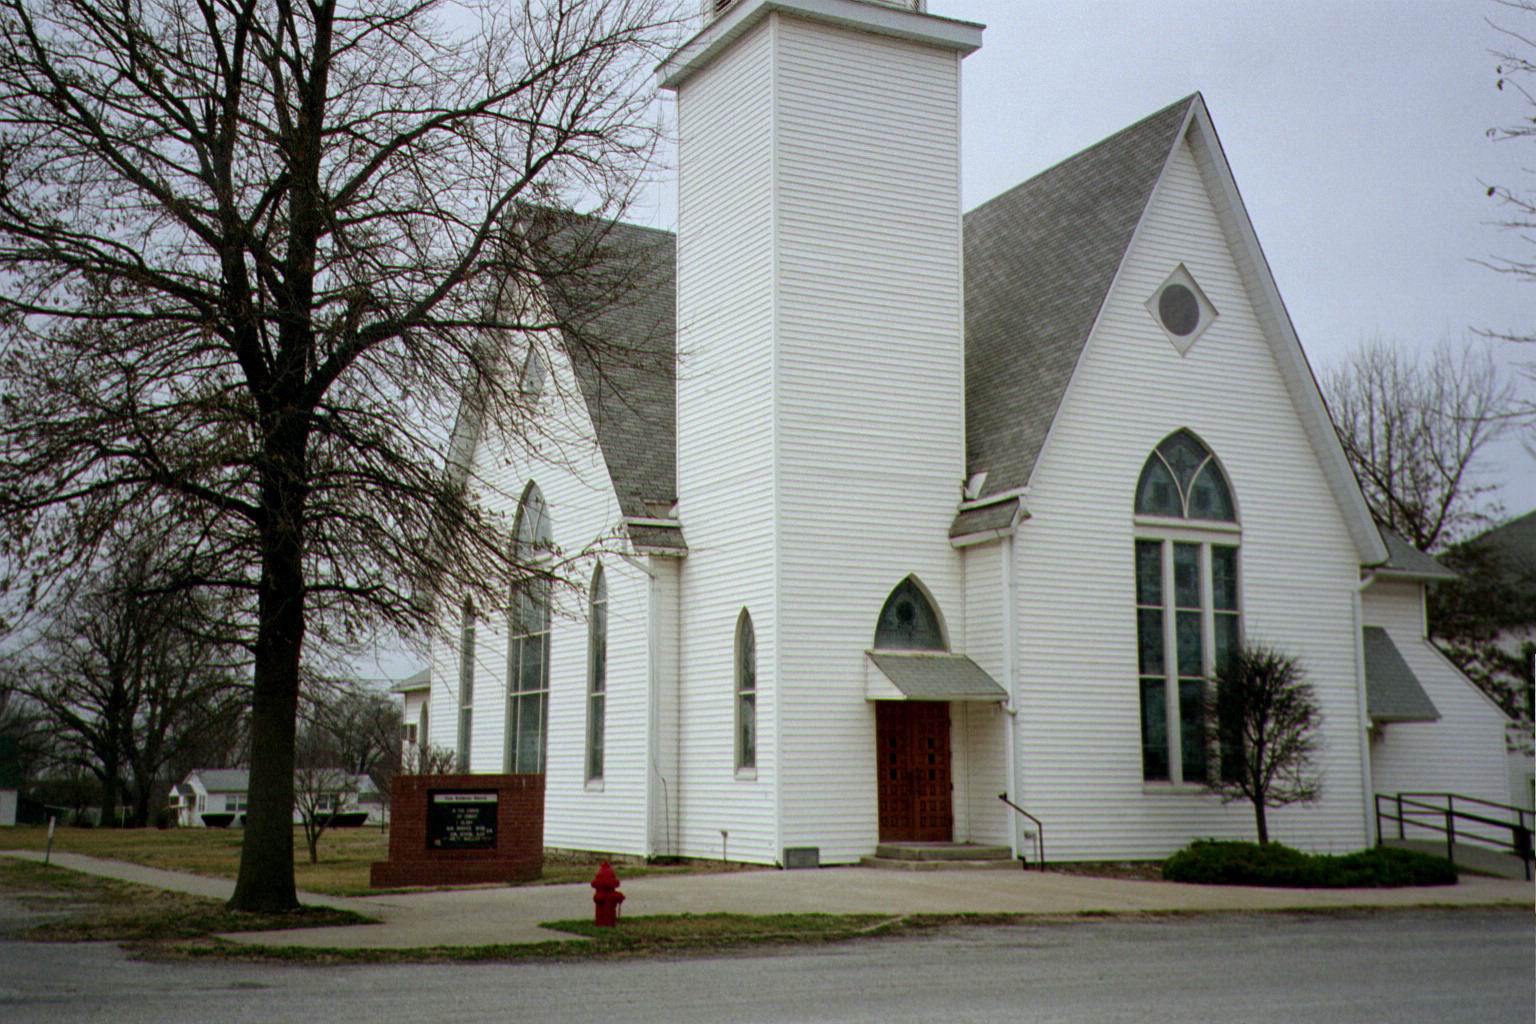 Description: Description: Zion Lutheran Church